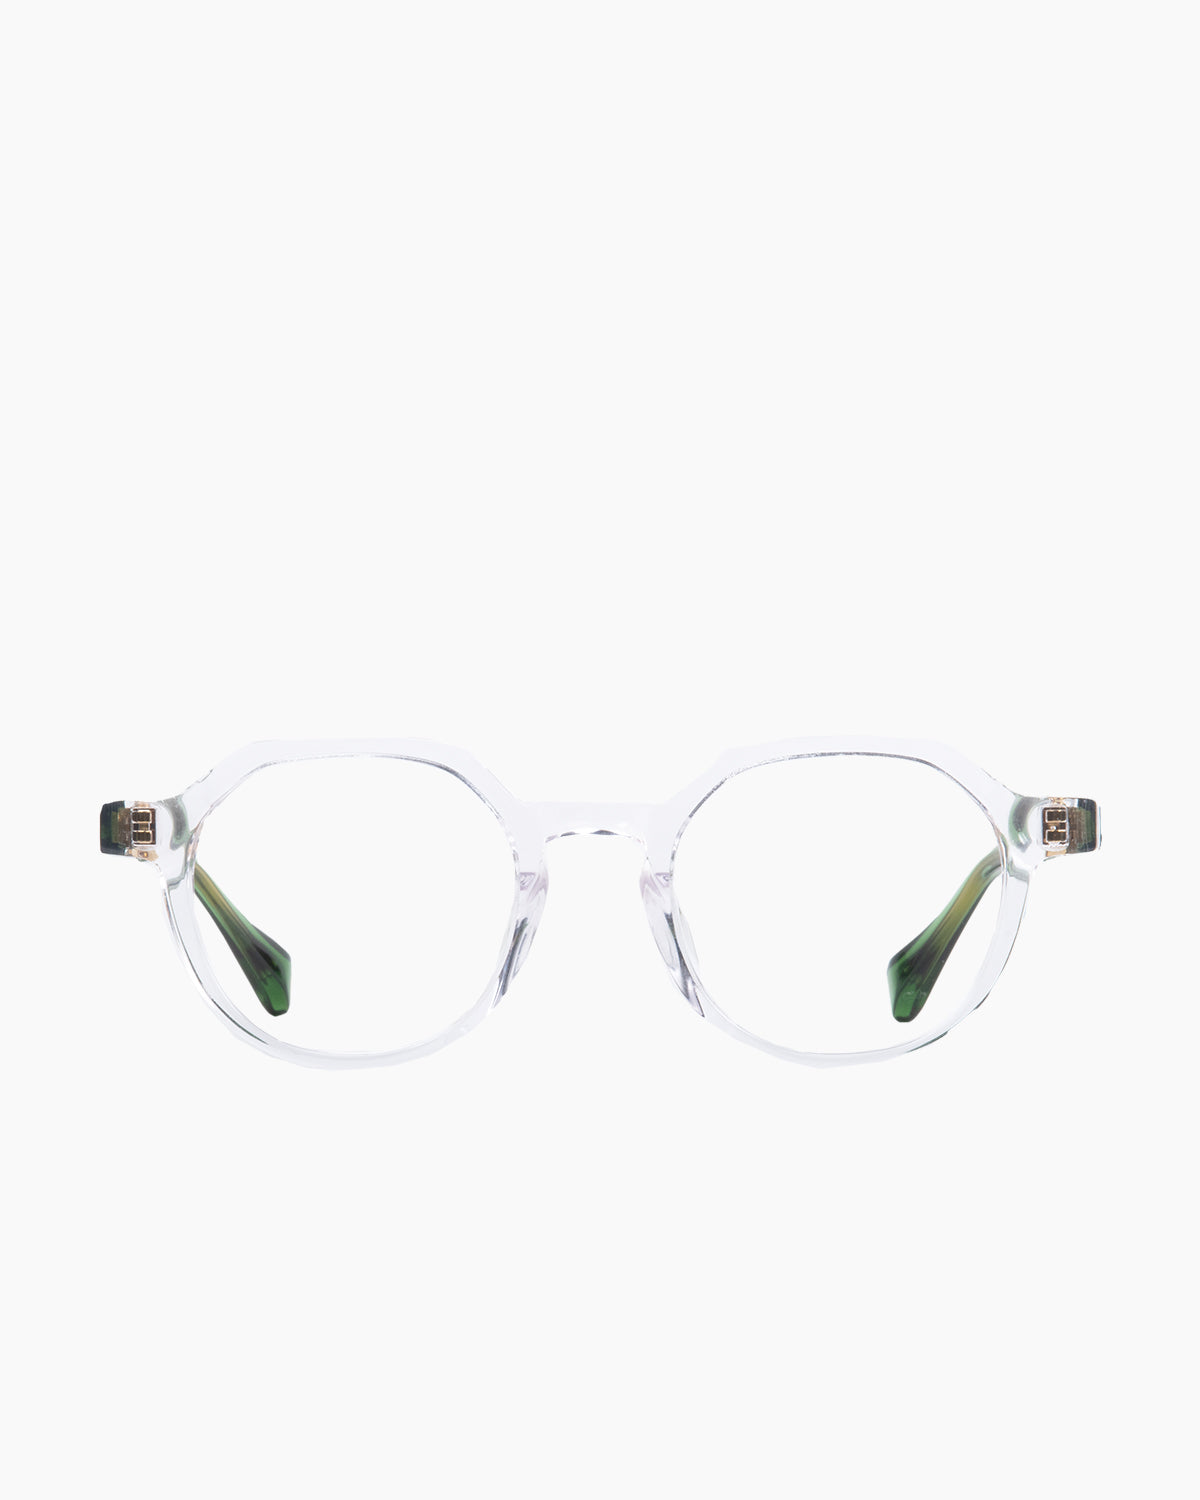 Francois Pinton - Haussmann9af - CG | glasses bar